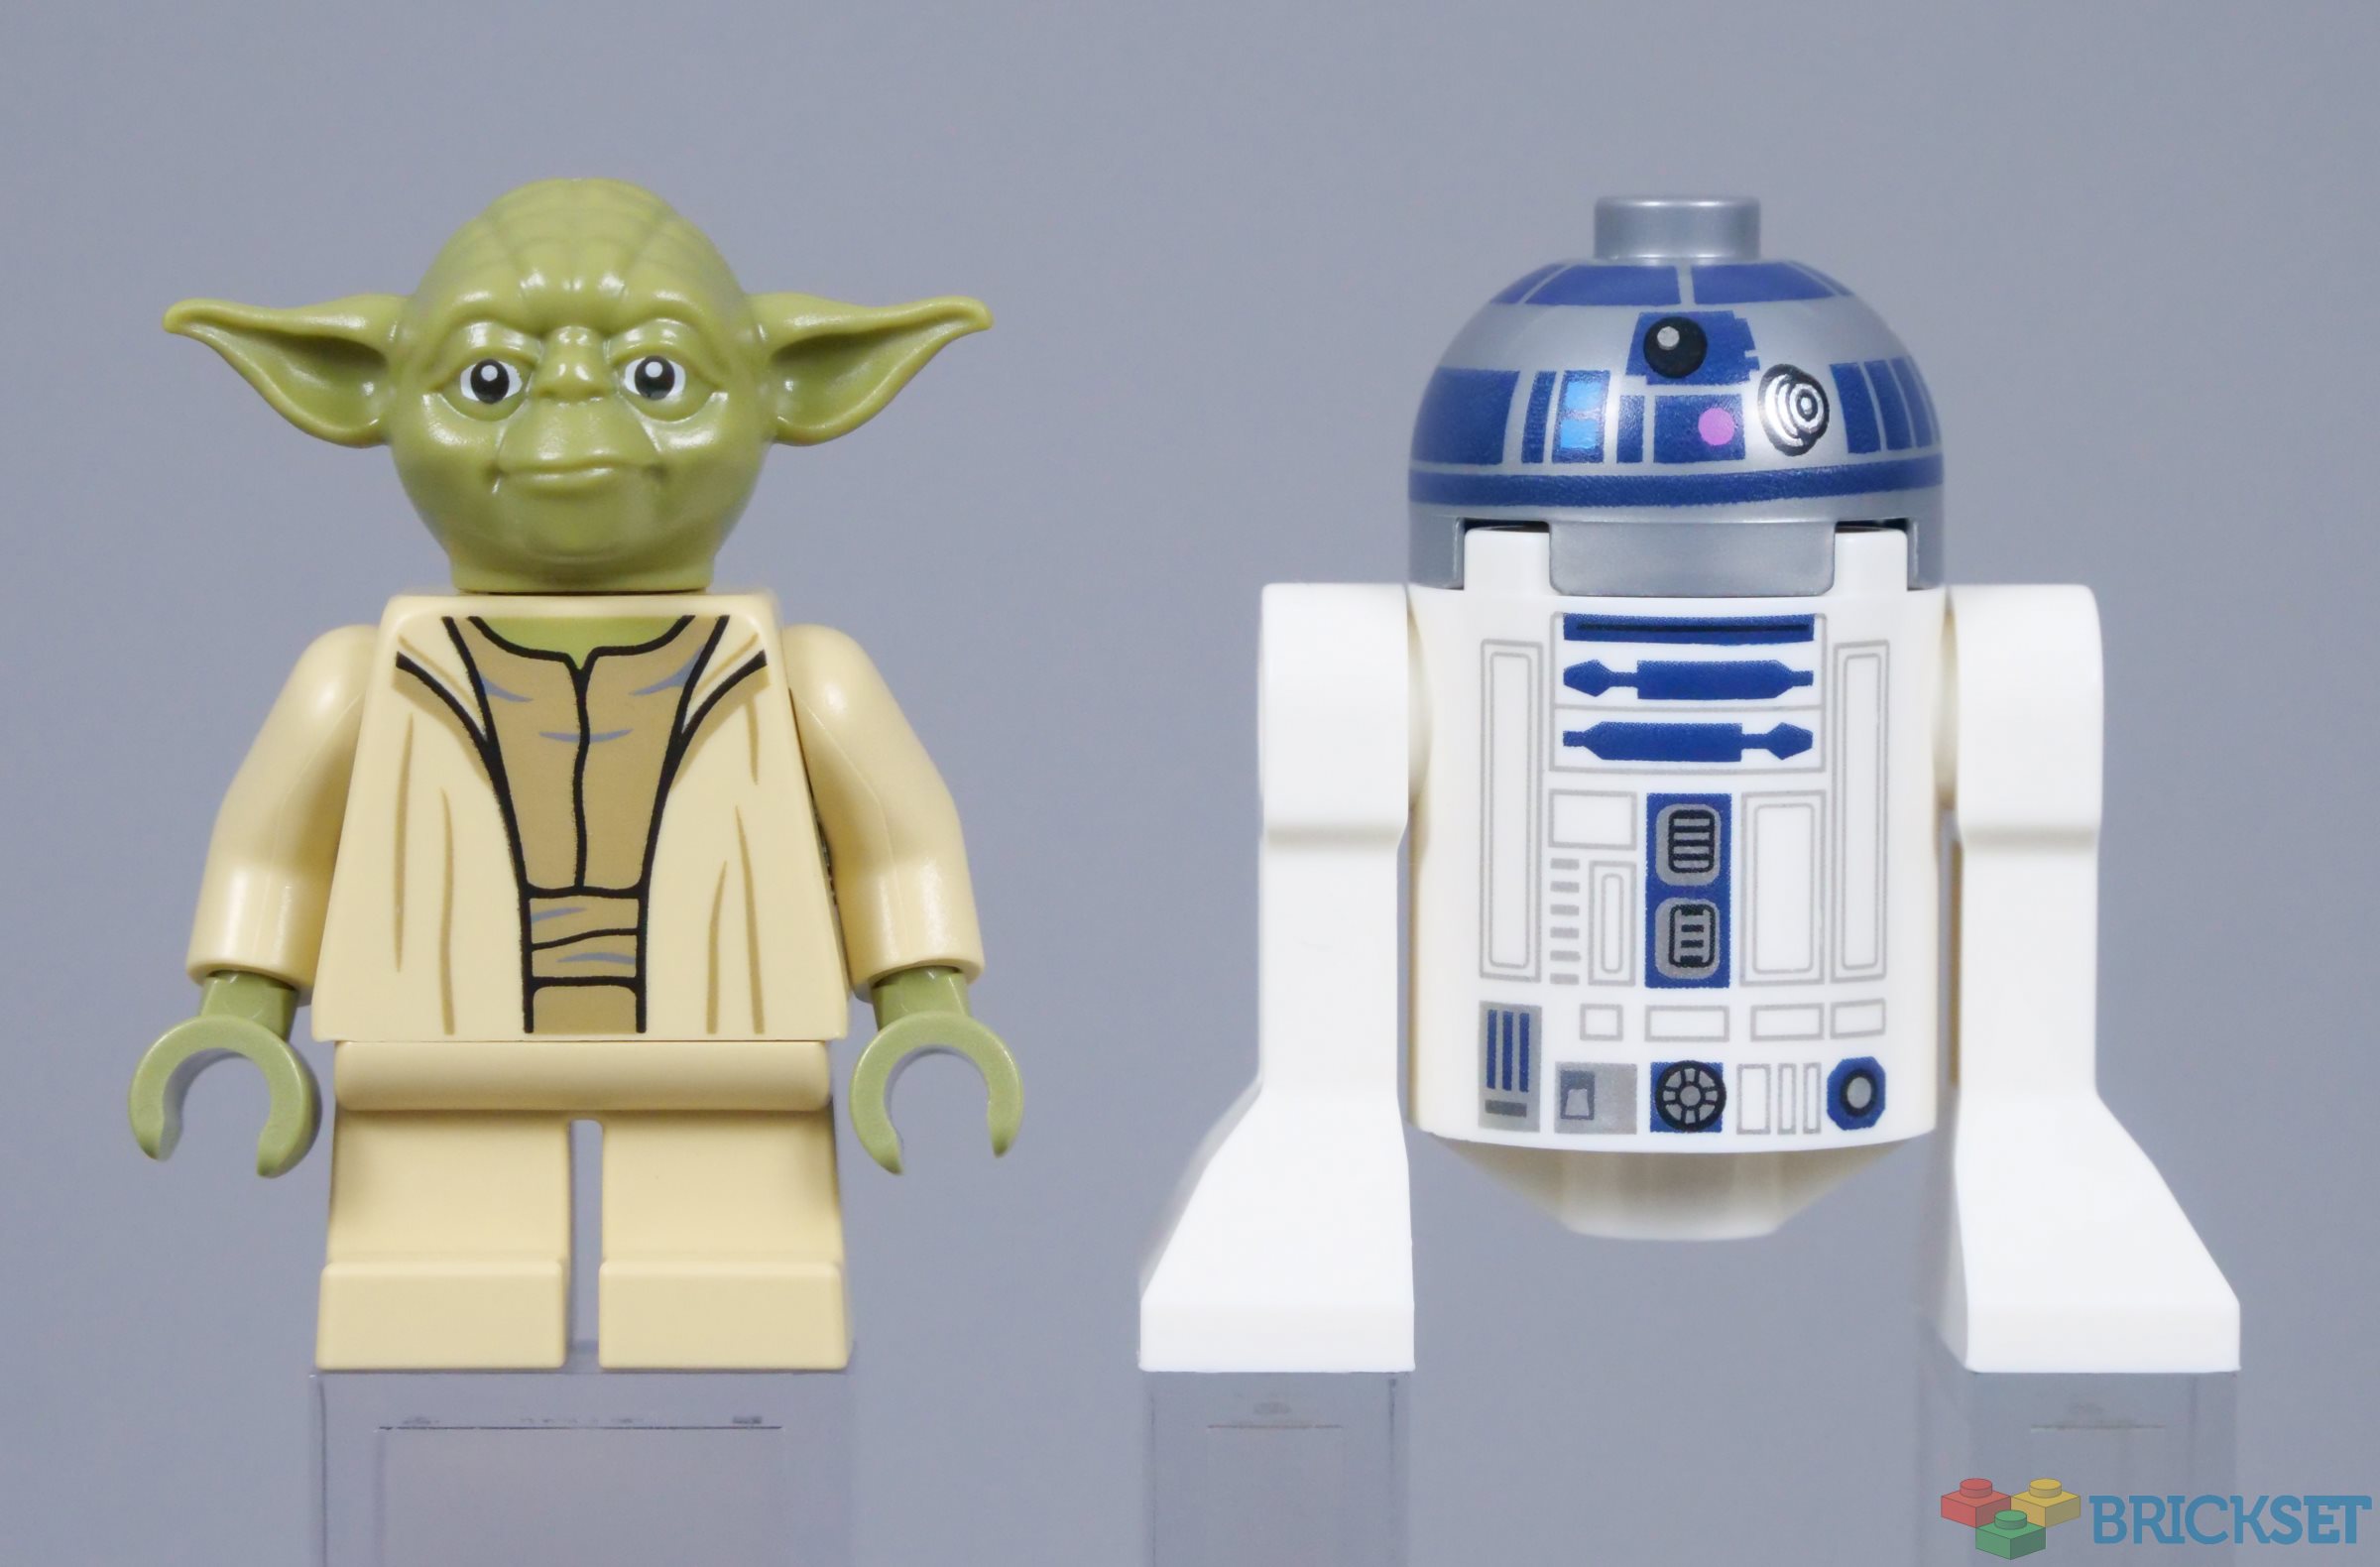 LEGO 75360 Yoda's Jedi Starfighter